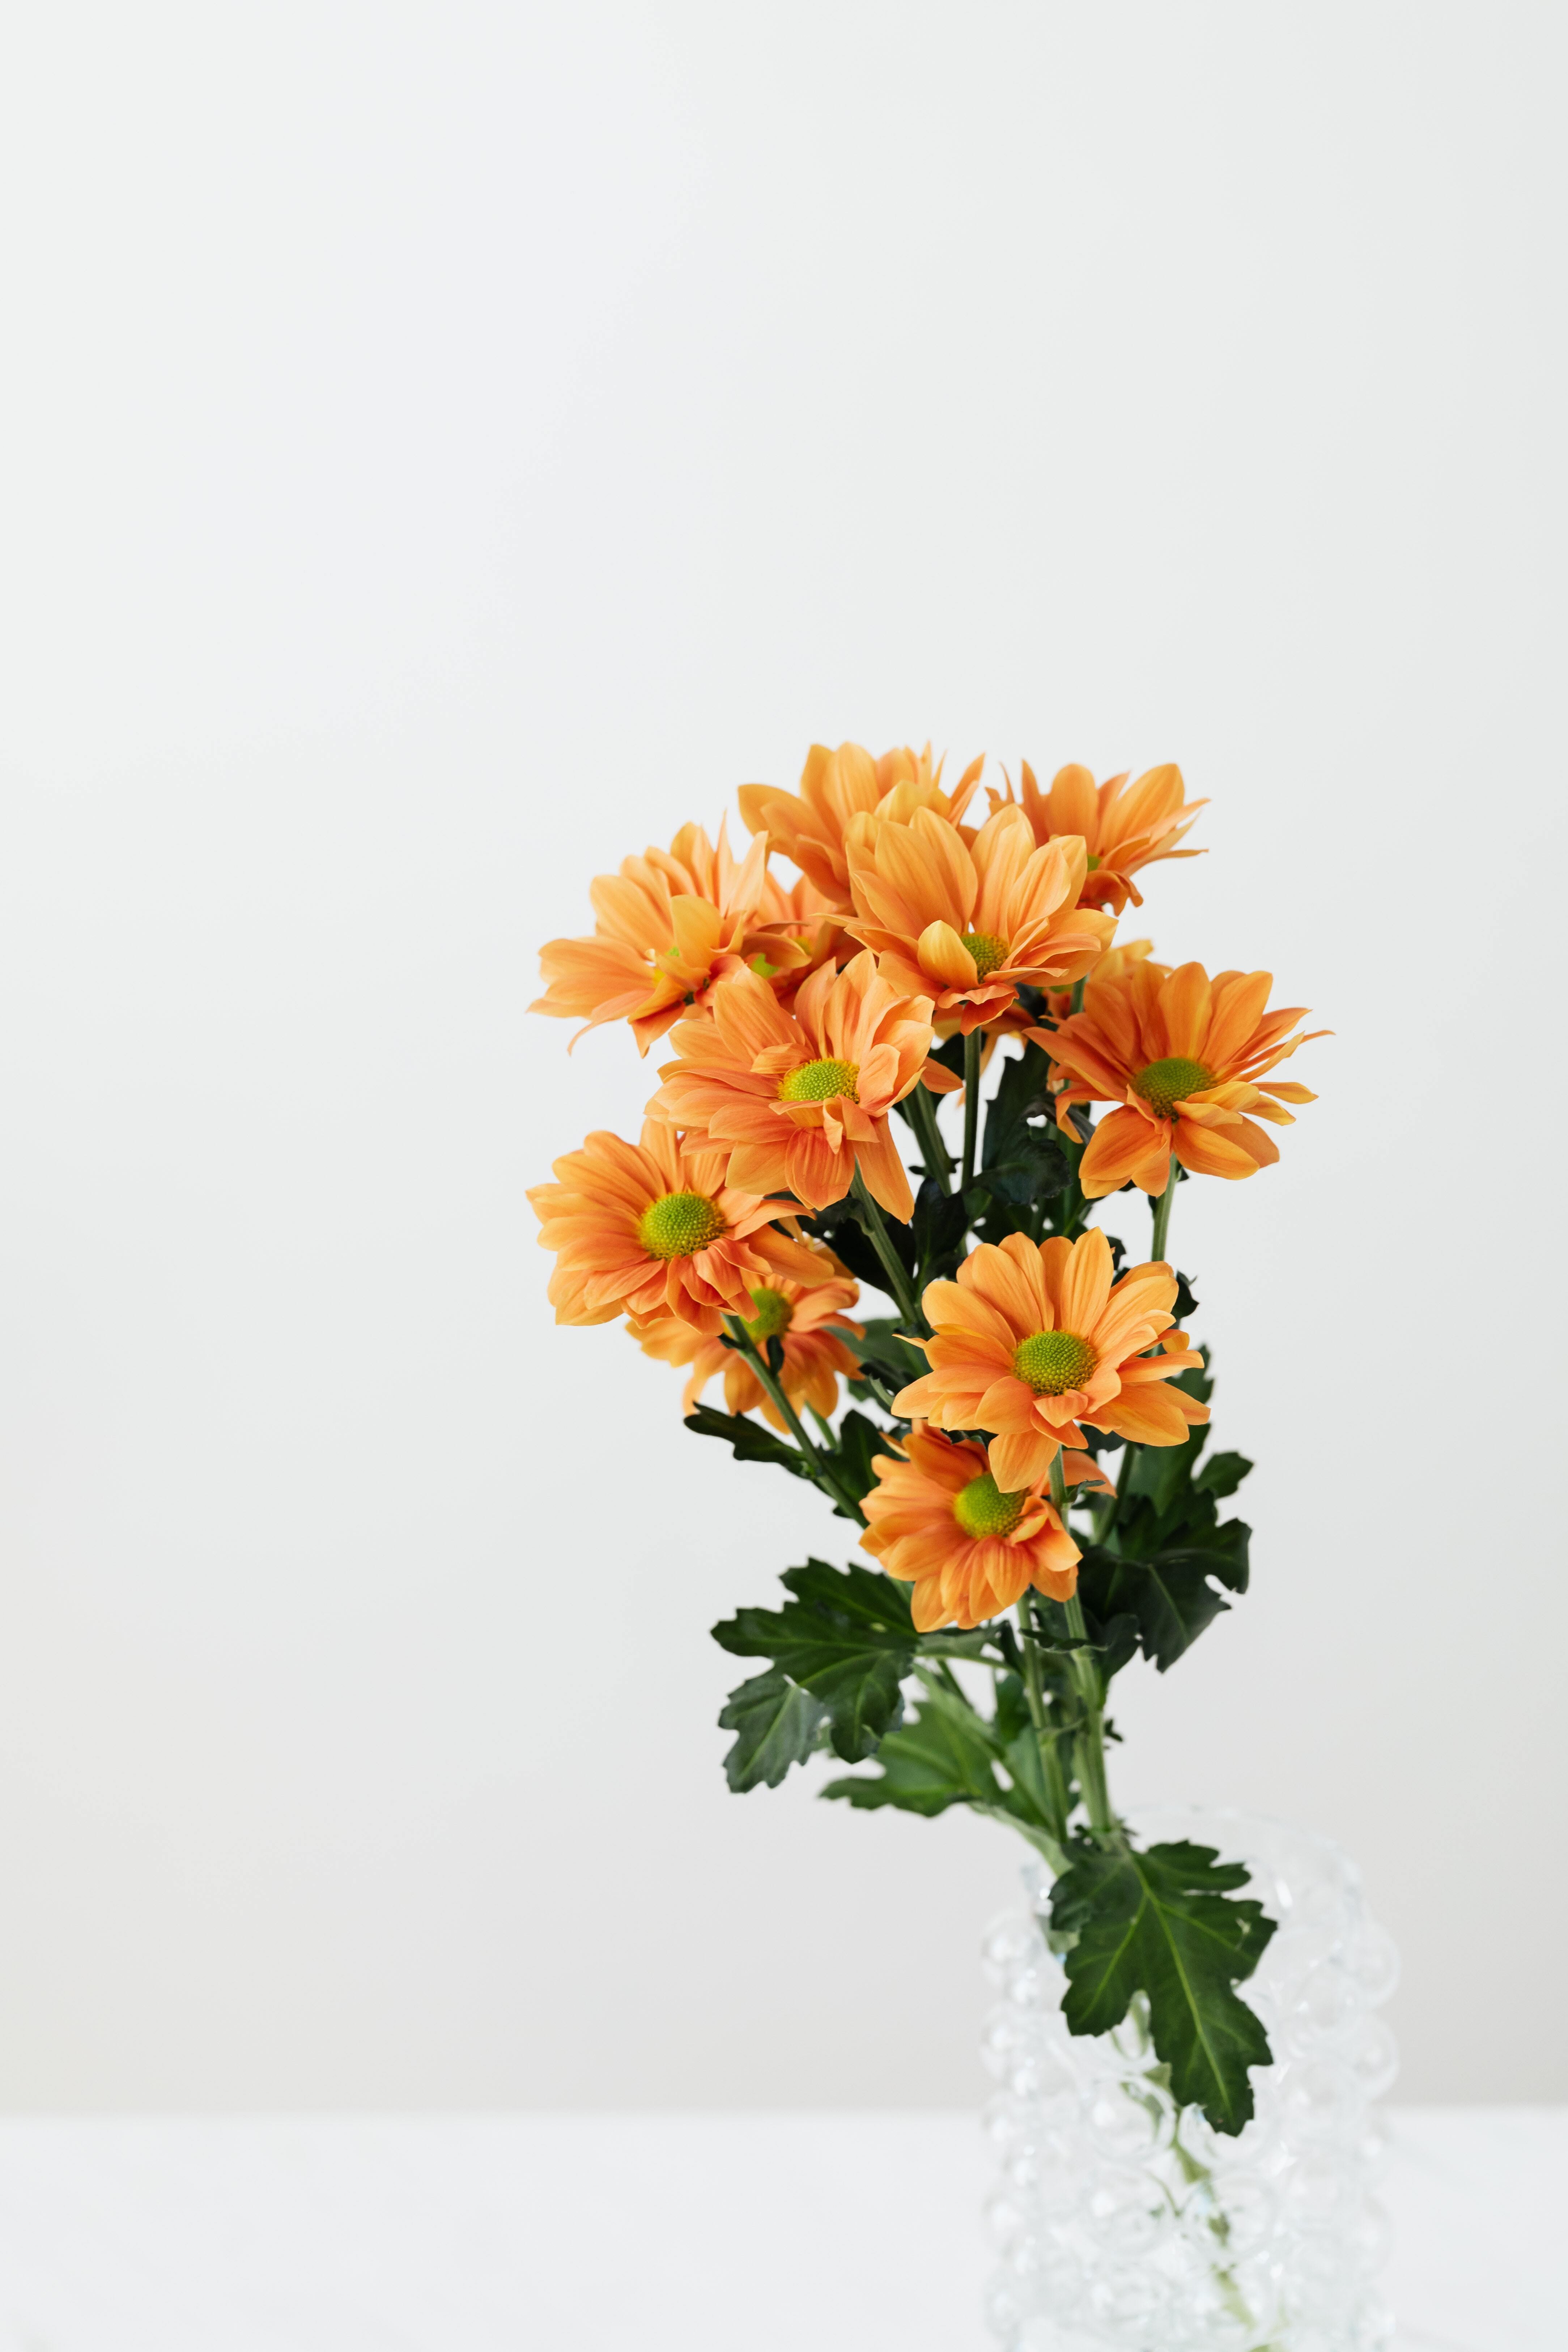 Image: Flowers, bouquet, vase, light background